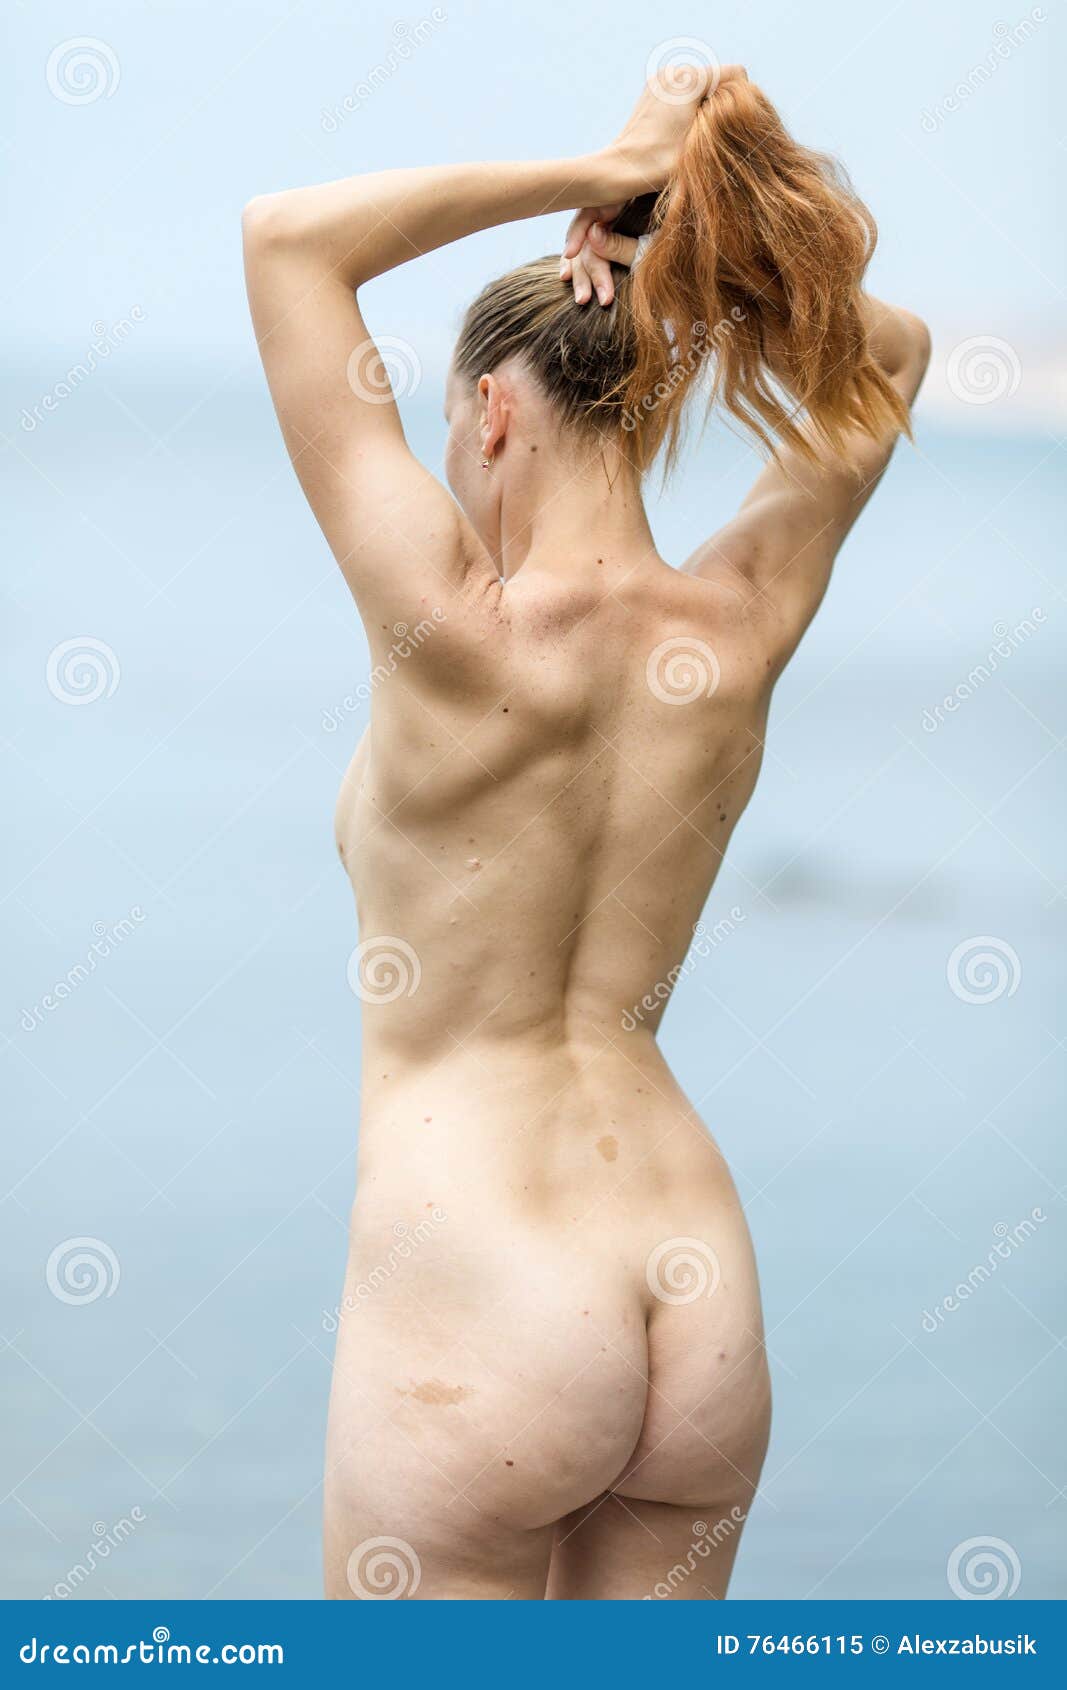 Naked women pics